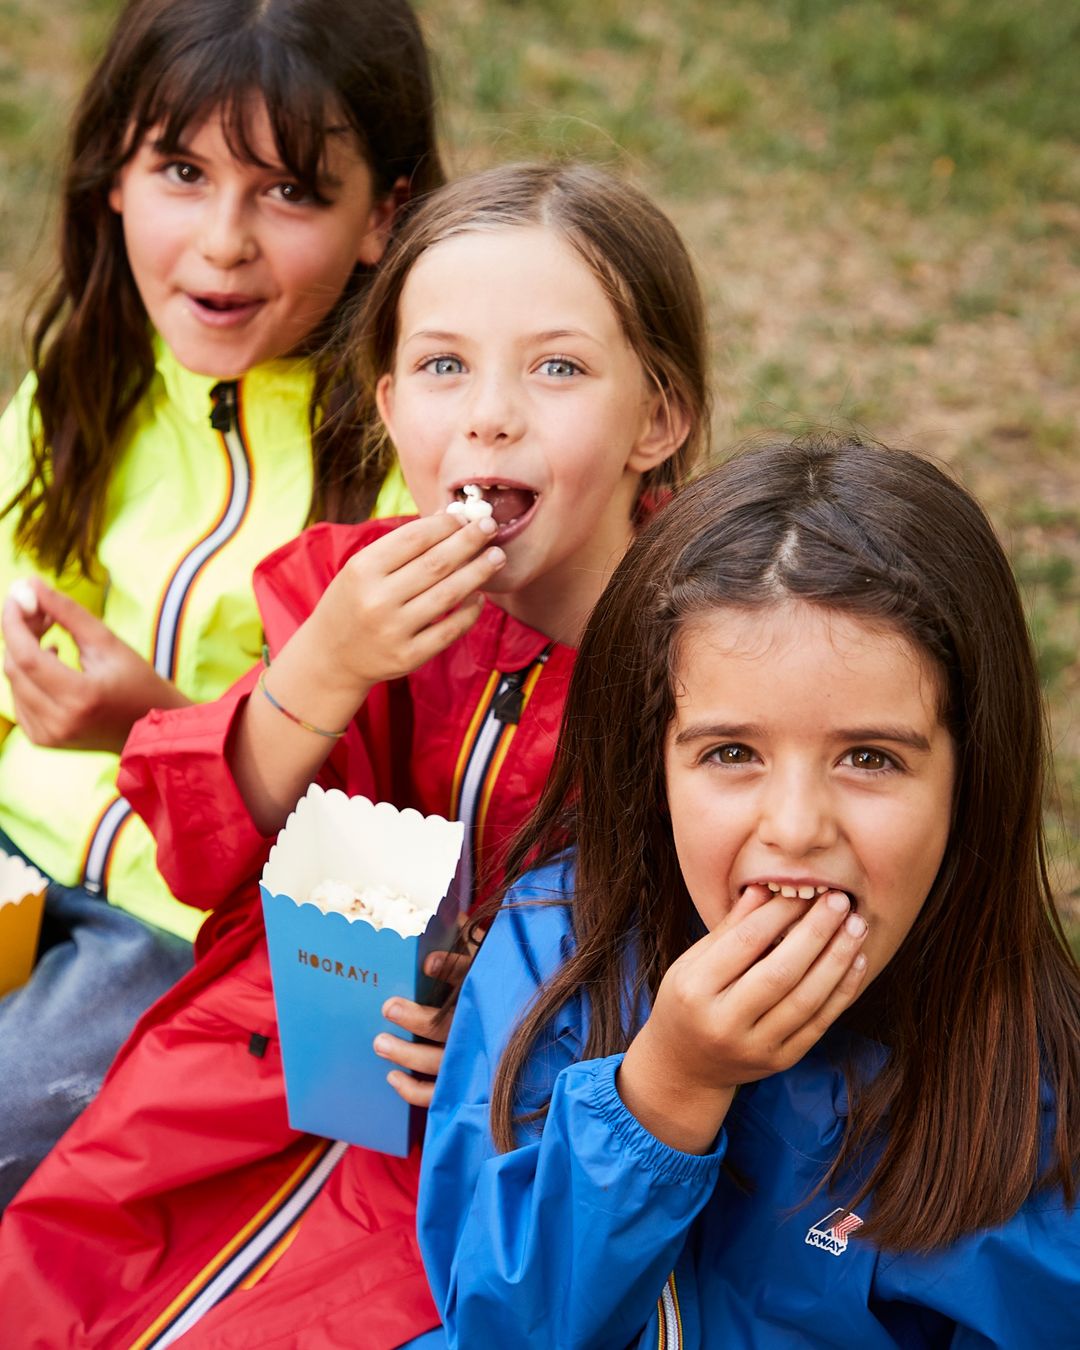 Kids eating pop corn outside wearing colorful K-Way Claude Jackets